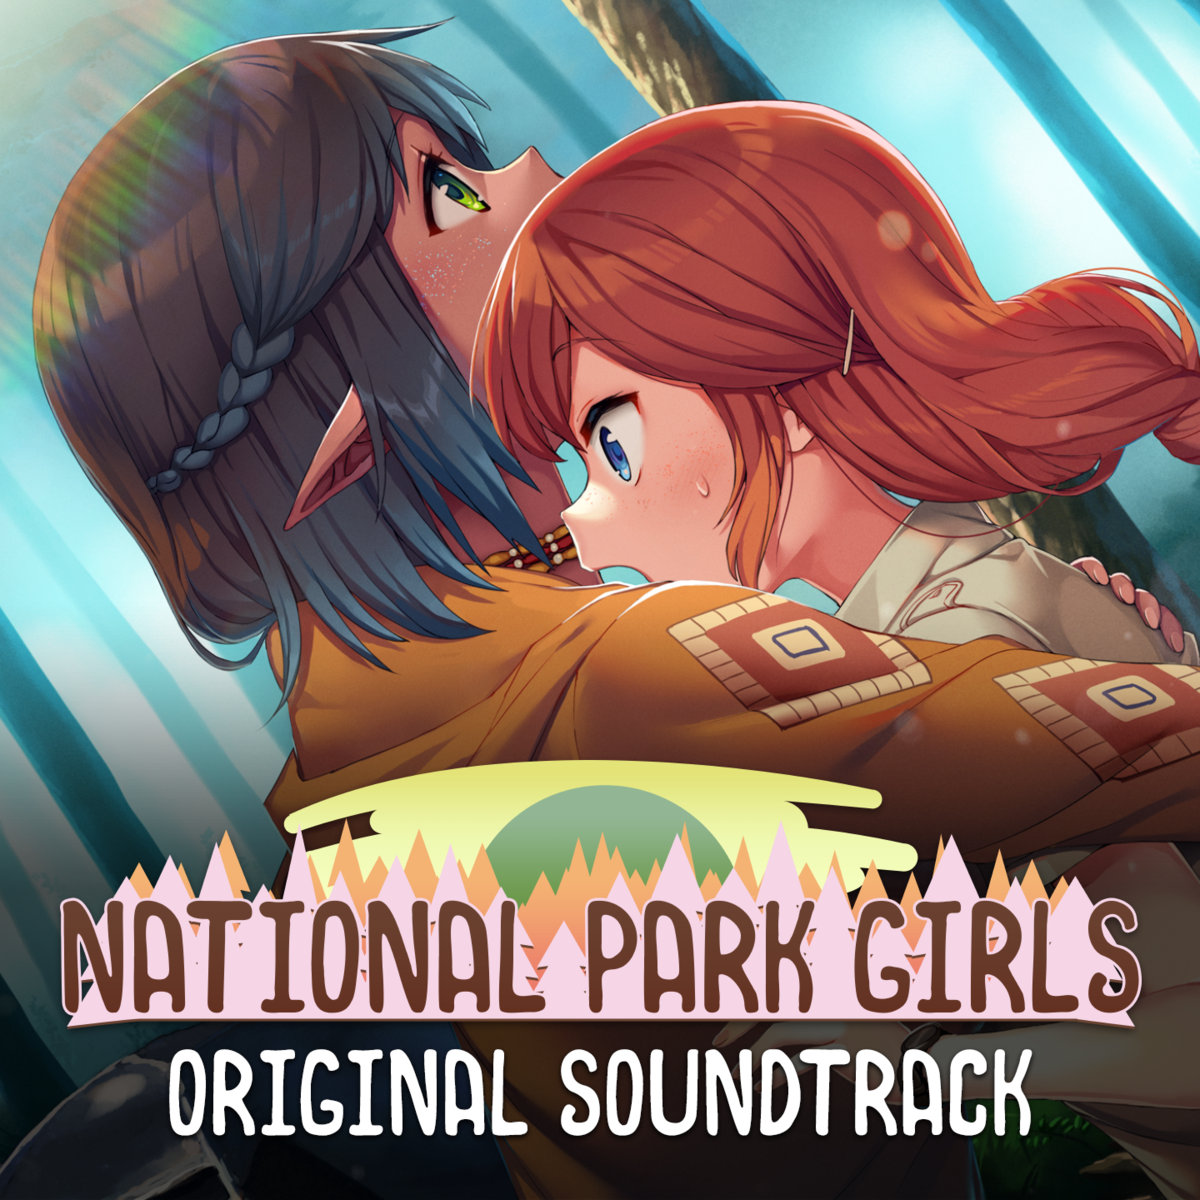 National Park girls. Girls OST. Assault girls Soundtrack. Girl soundtrack